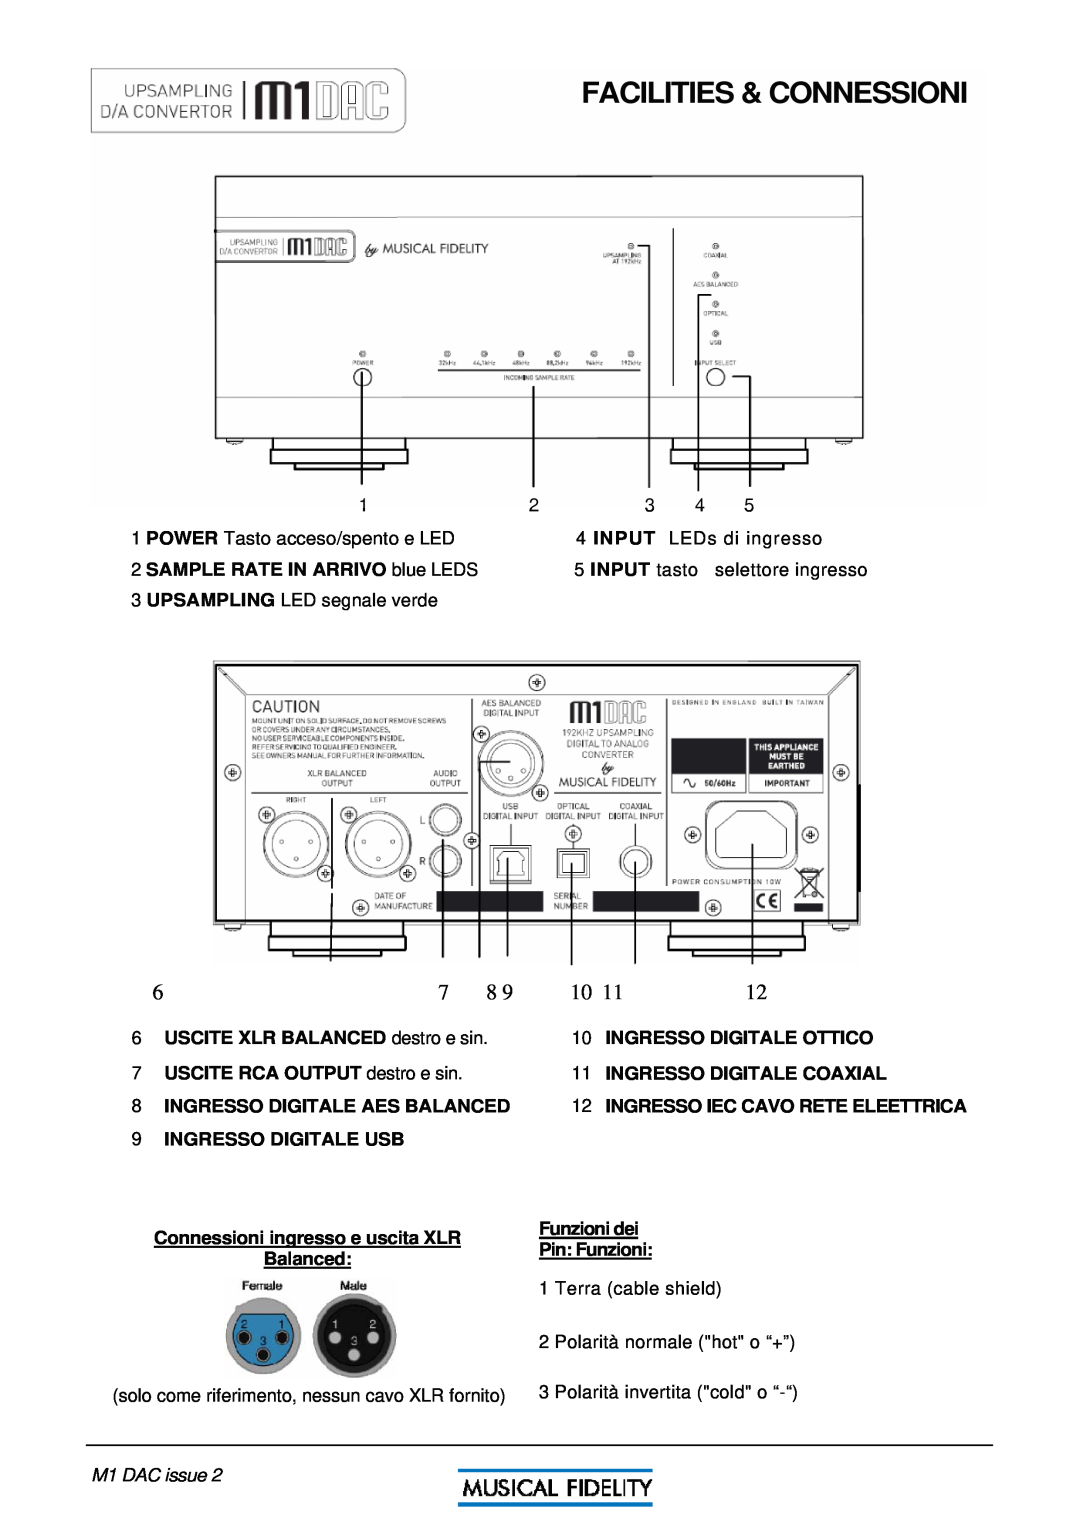 Musical Fidelity M1 DAC manual Facilities & Connessioni 